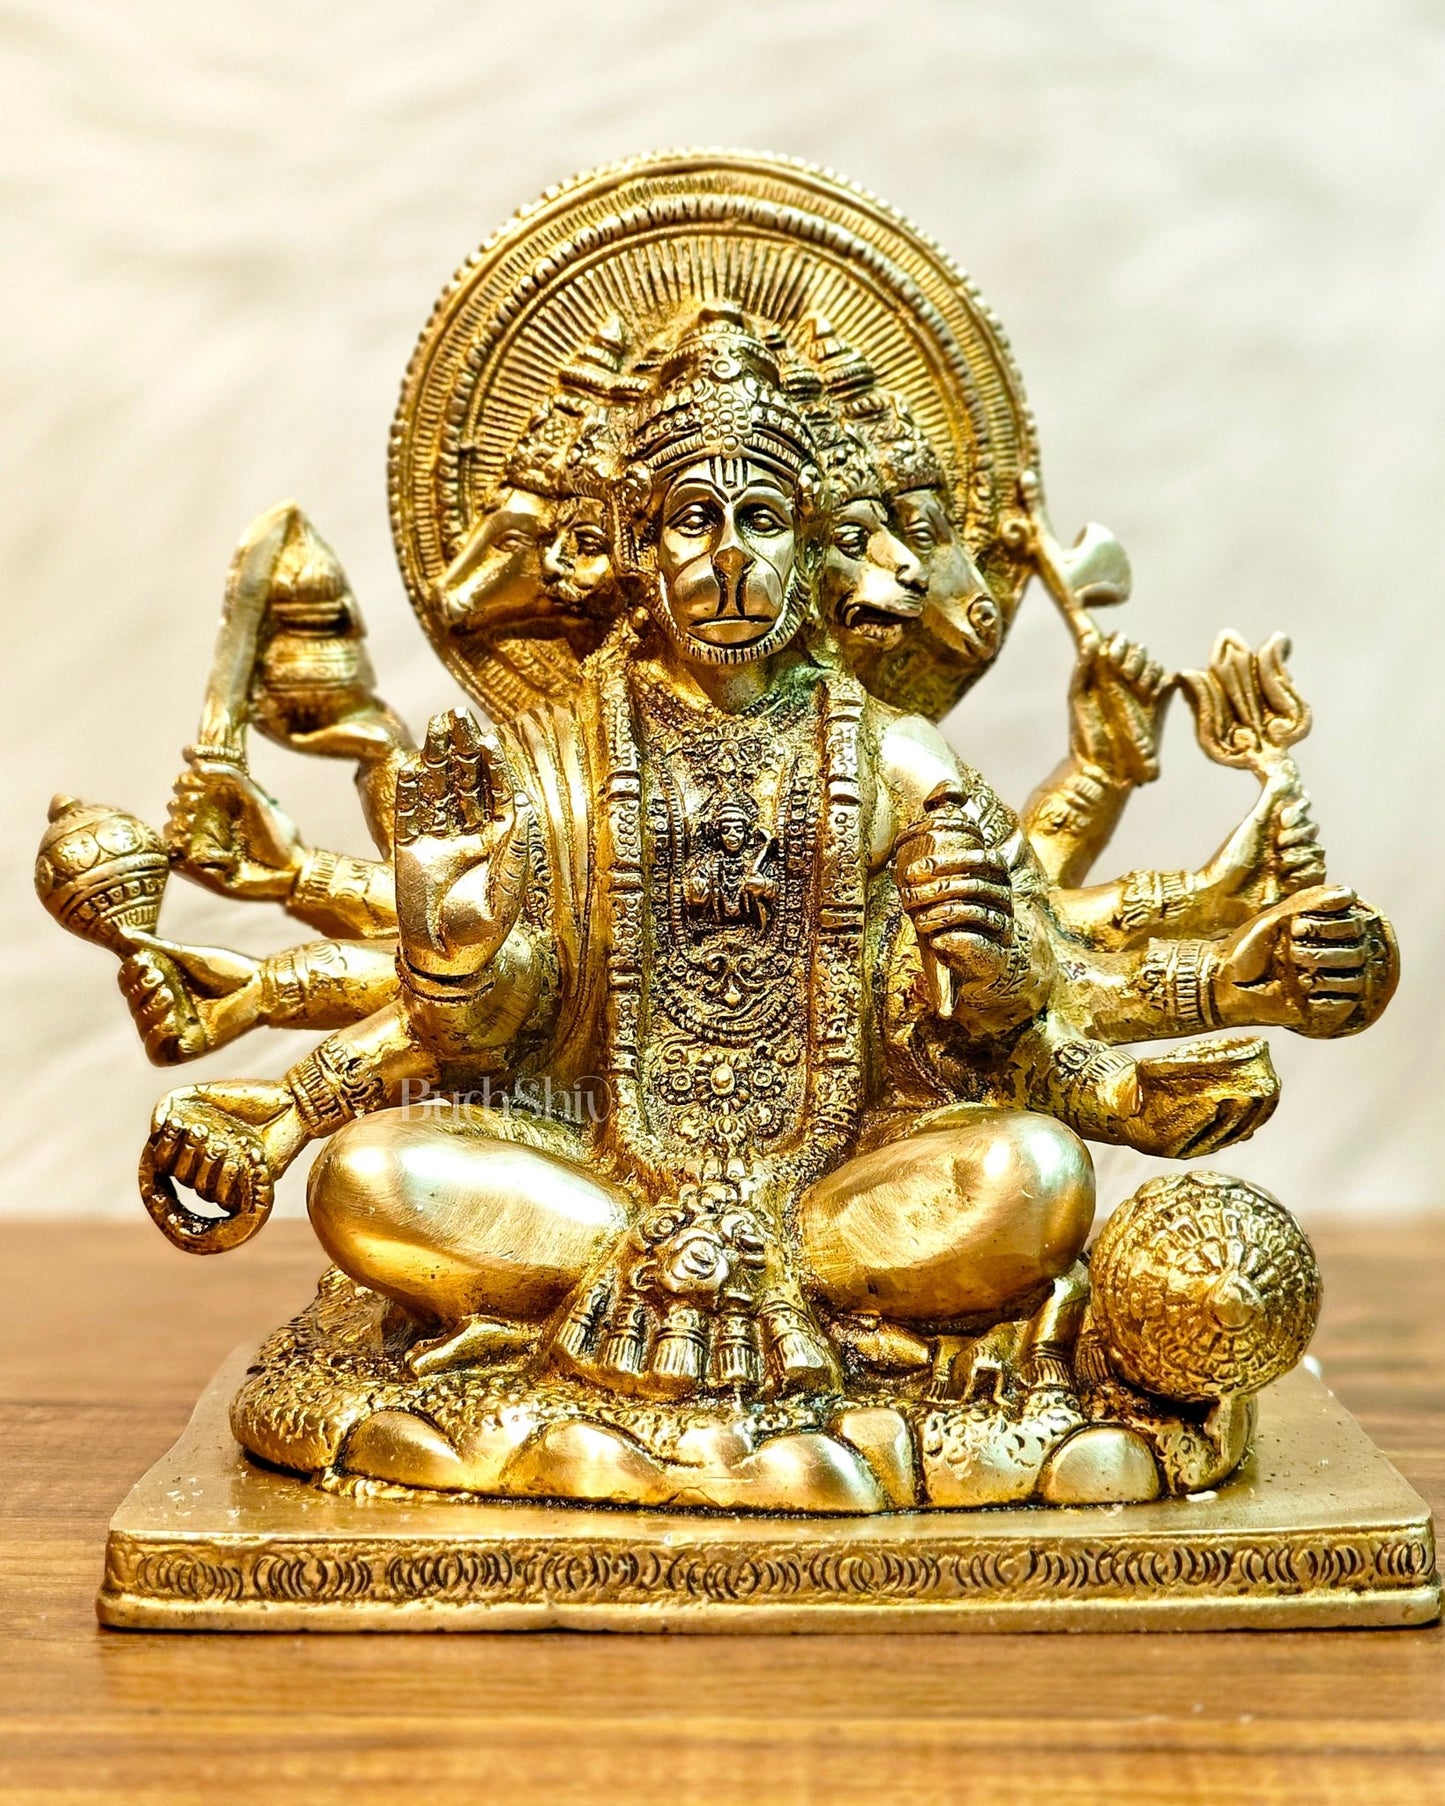 Pure Brass Superfine Panchmukhi Hanuman Blessing Statue - 10 inch - Budhshiv.com